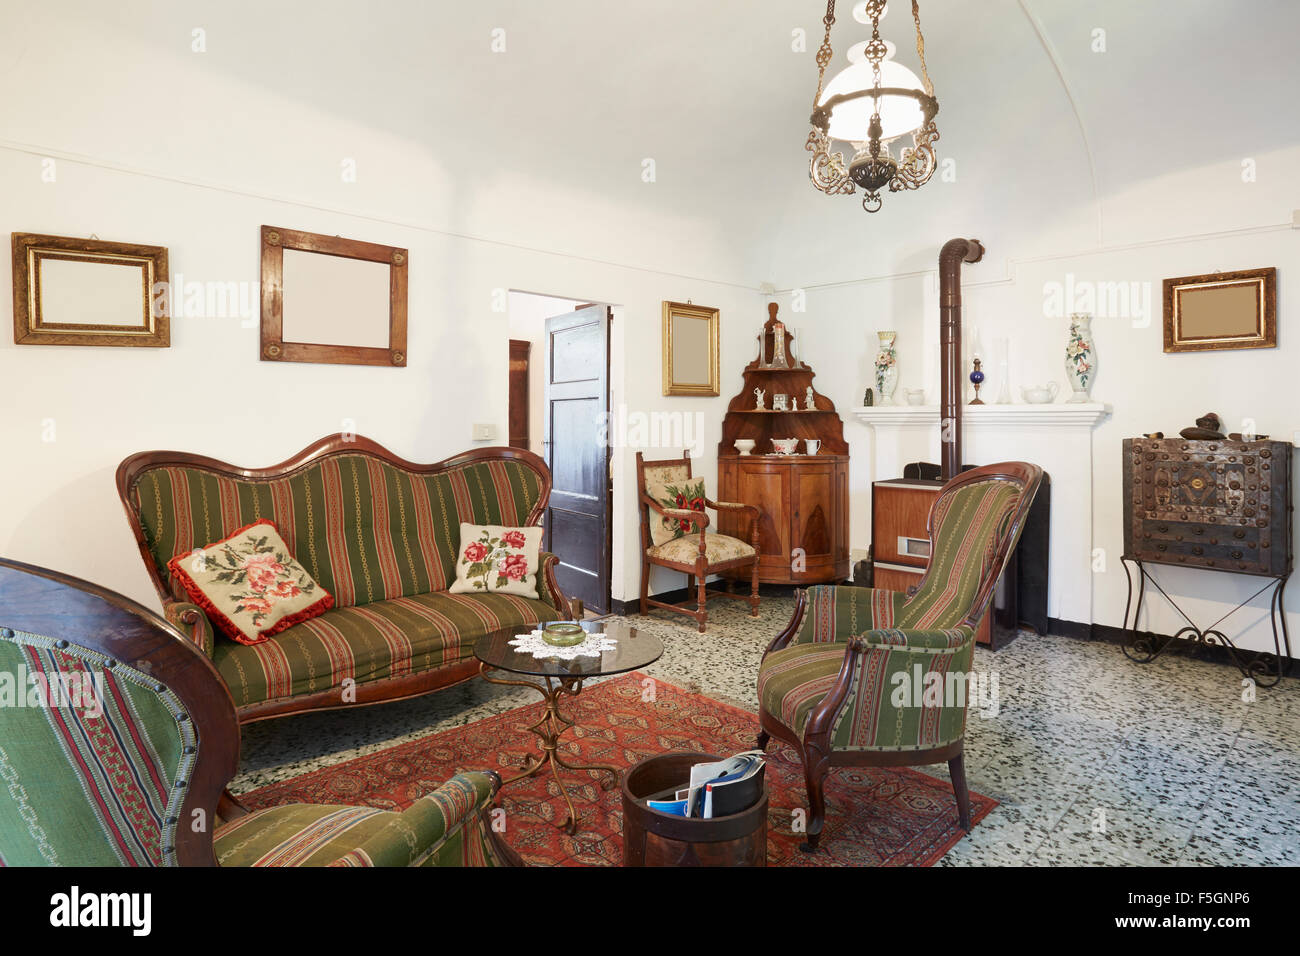 Living room with antiquities, Italian interior Stock Photo